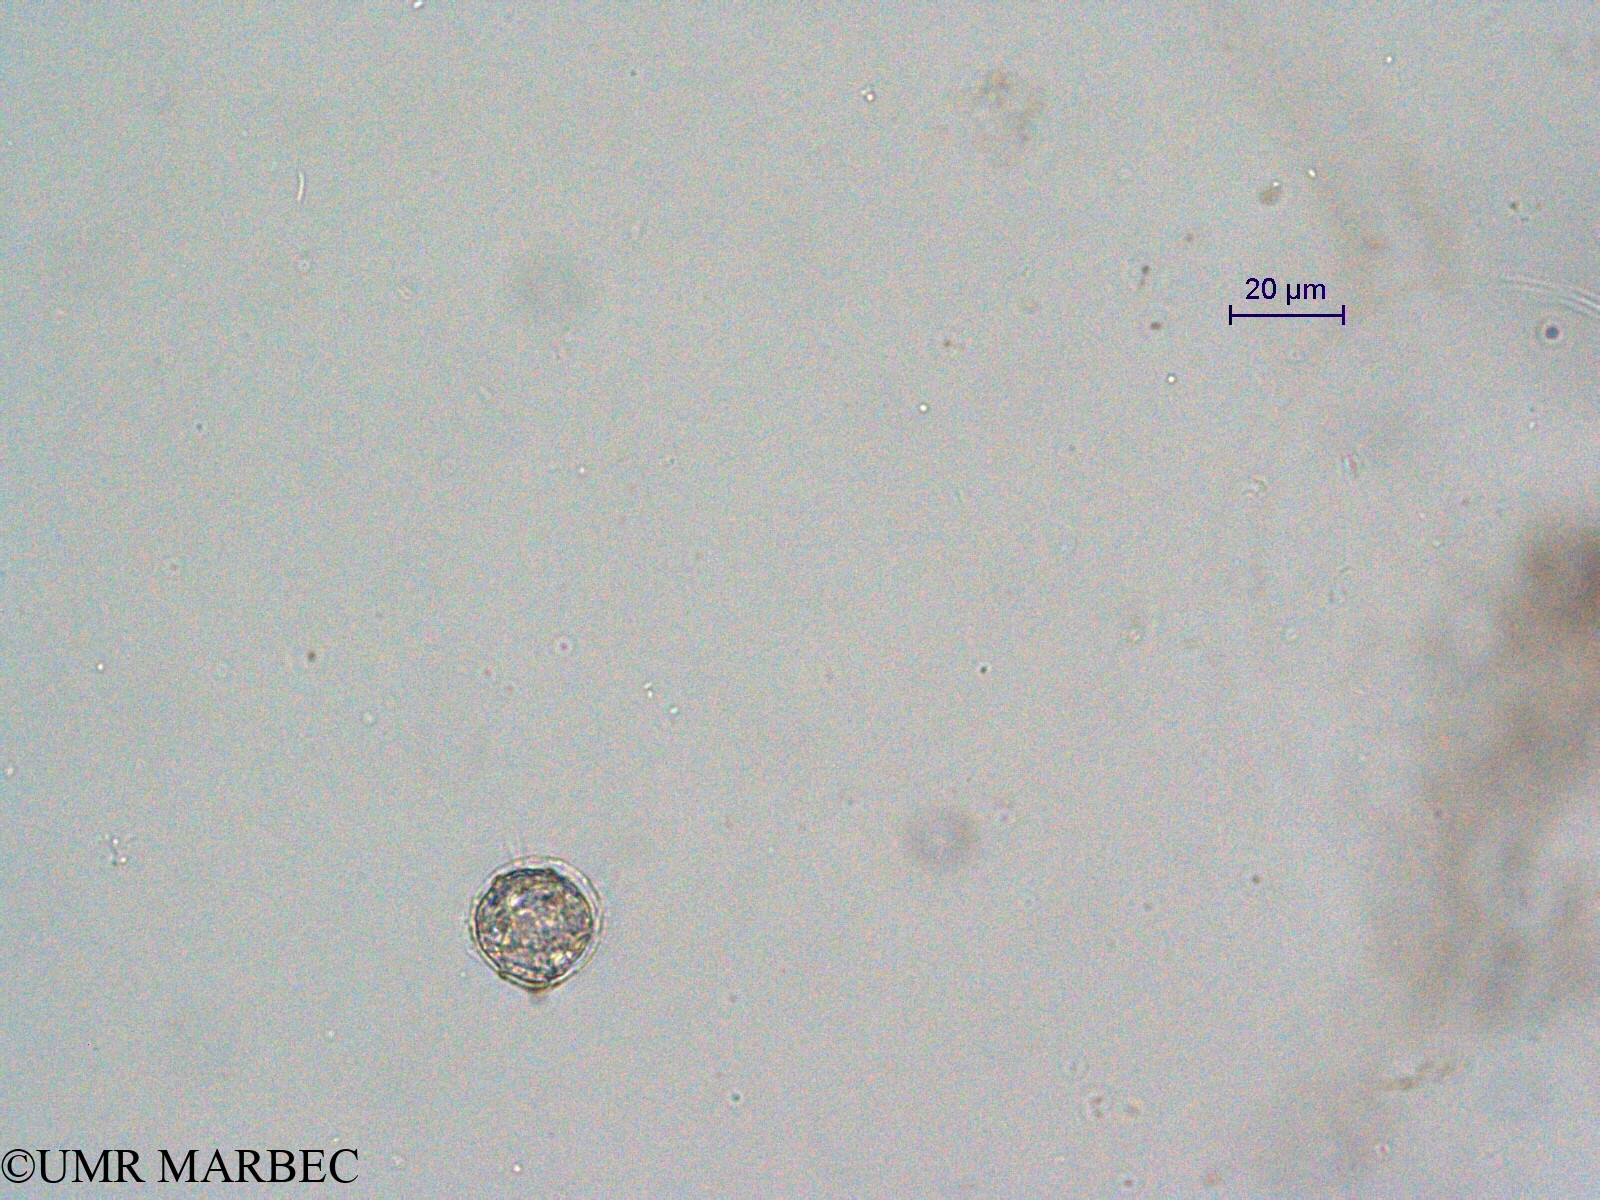 phyto/Scattered_Islands/all/COMMA April 2011/Protoperidinium steinii (ancien Protoperidinium sp21-1)(copy).jpg